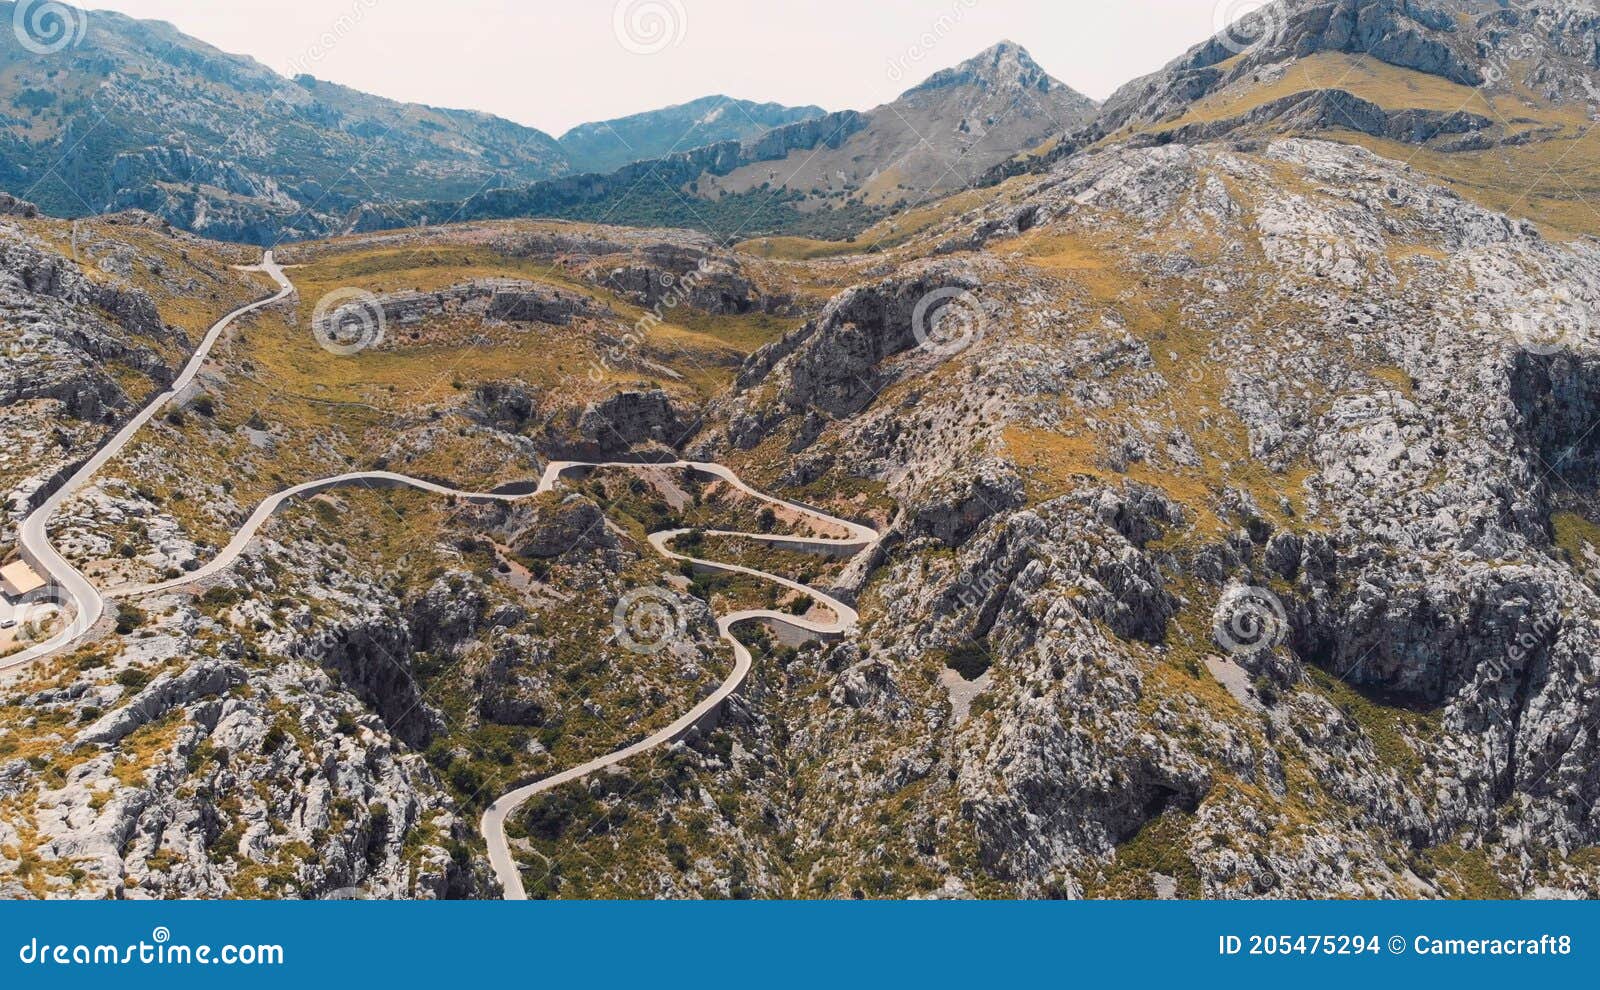 the serpentine in the mountain road, the knotted tie - nudo de corbata, serra de tramuntana, mallorca, beleric islands